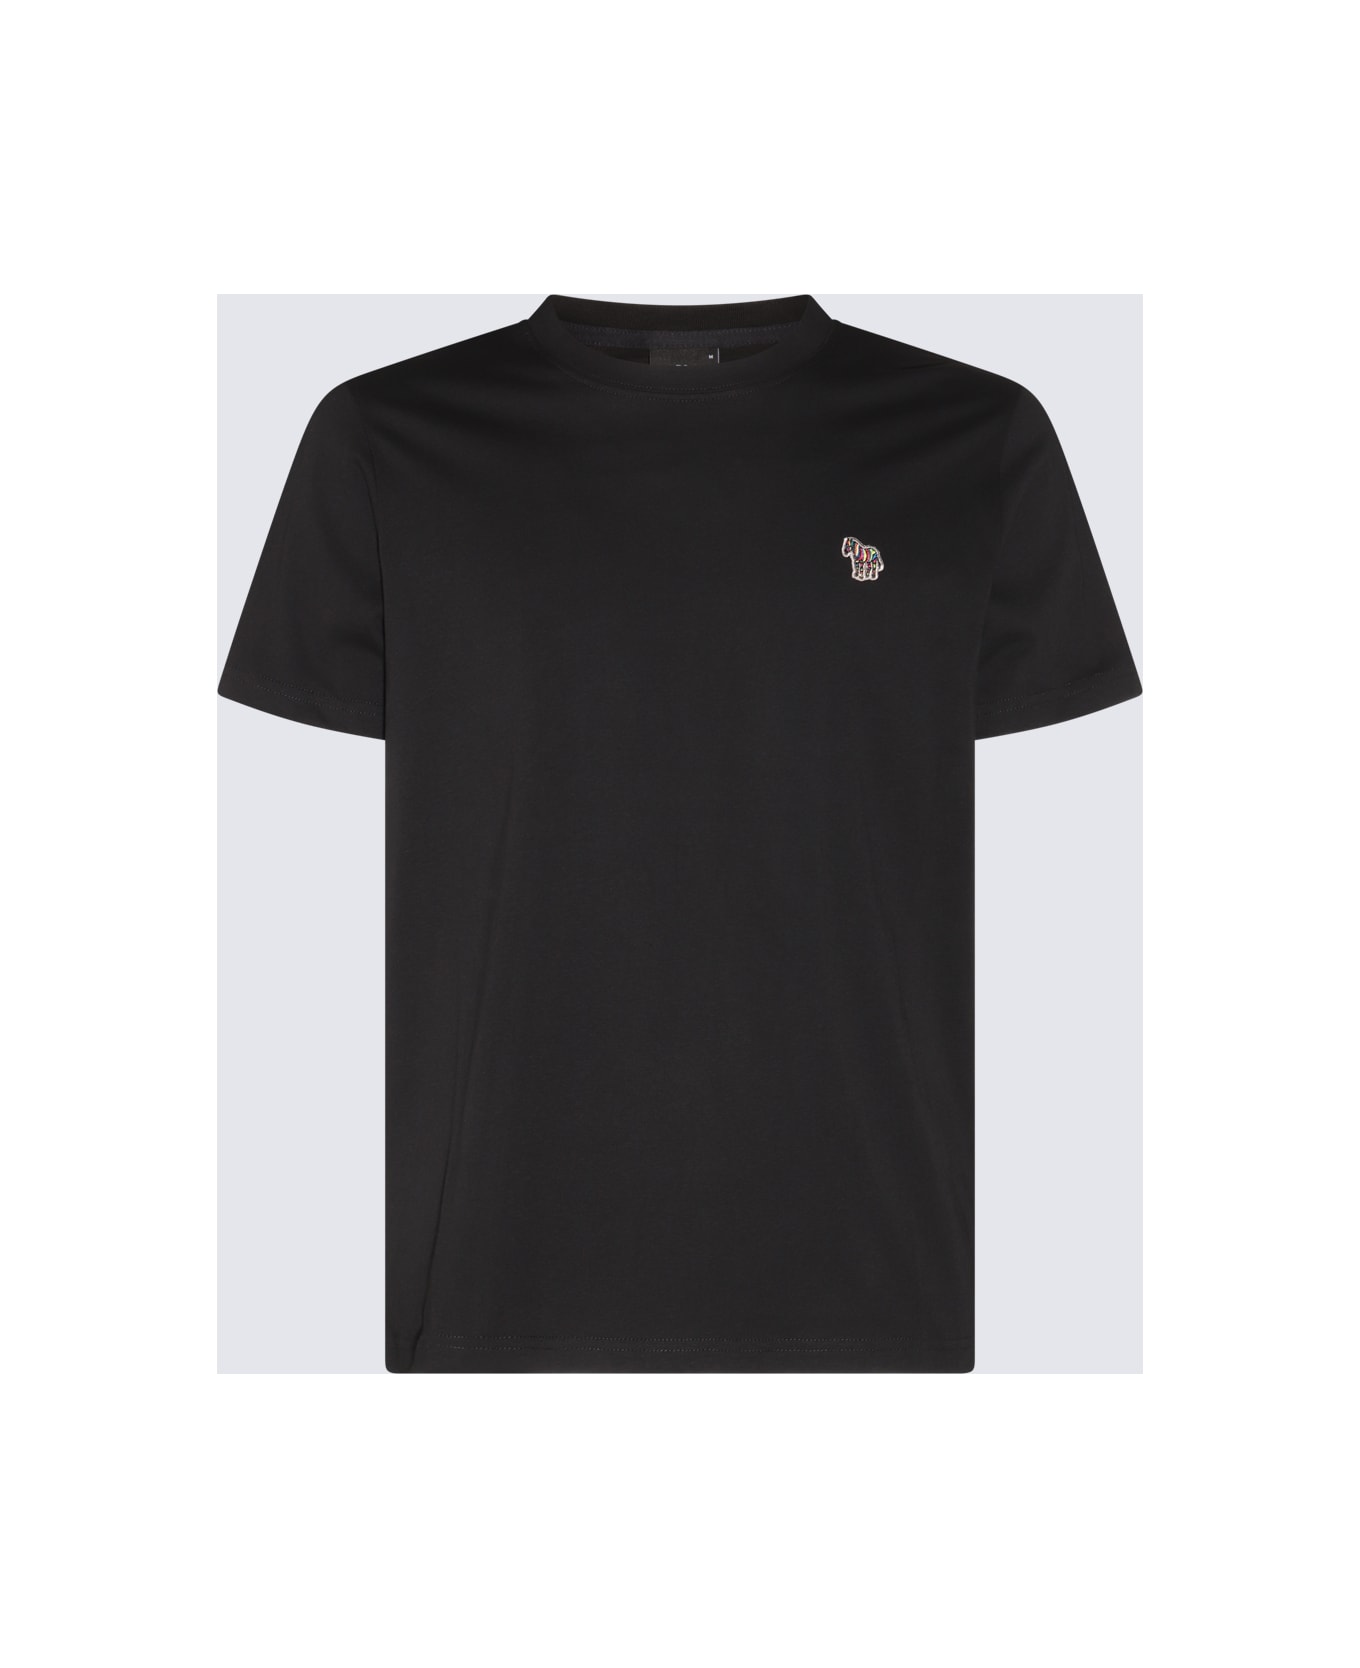 Paul Smith Black Cotton T-shirt